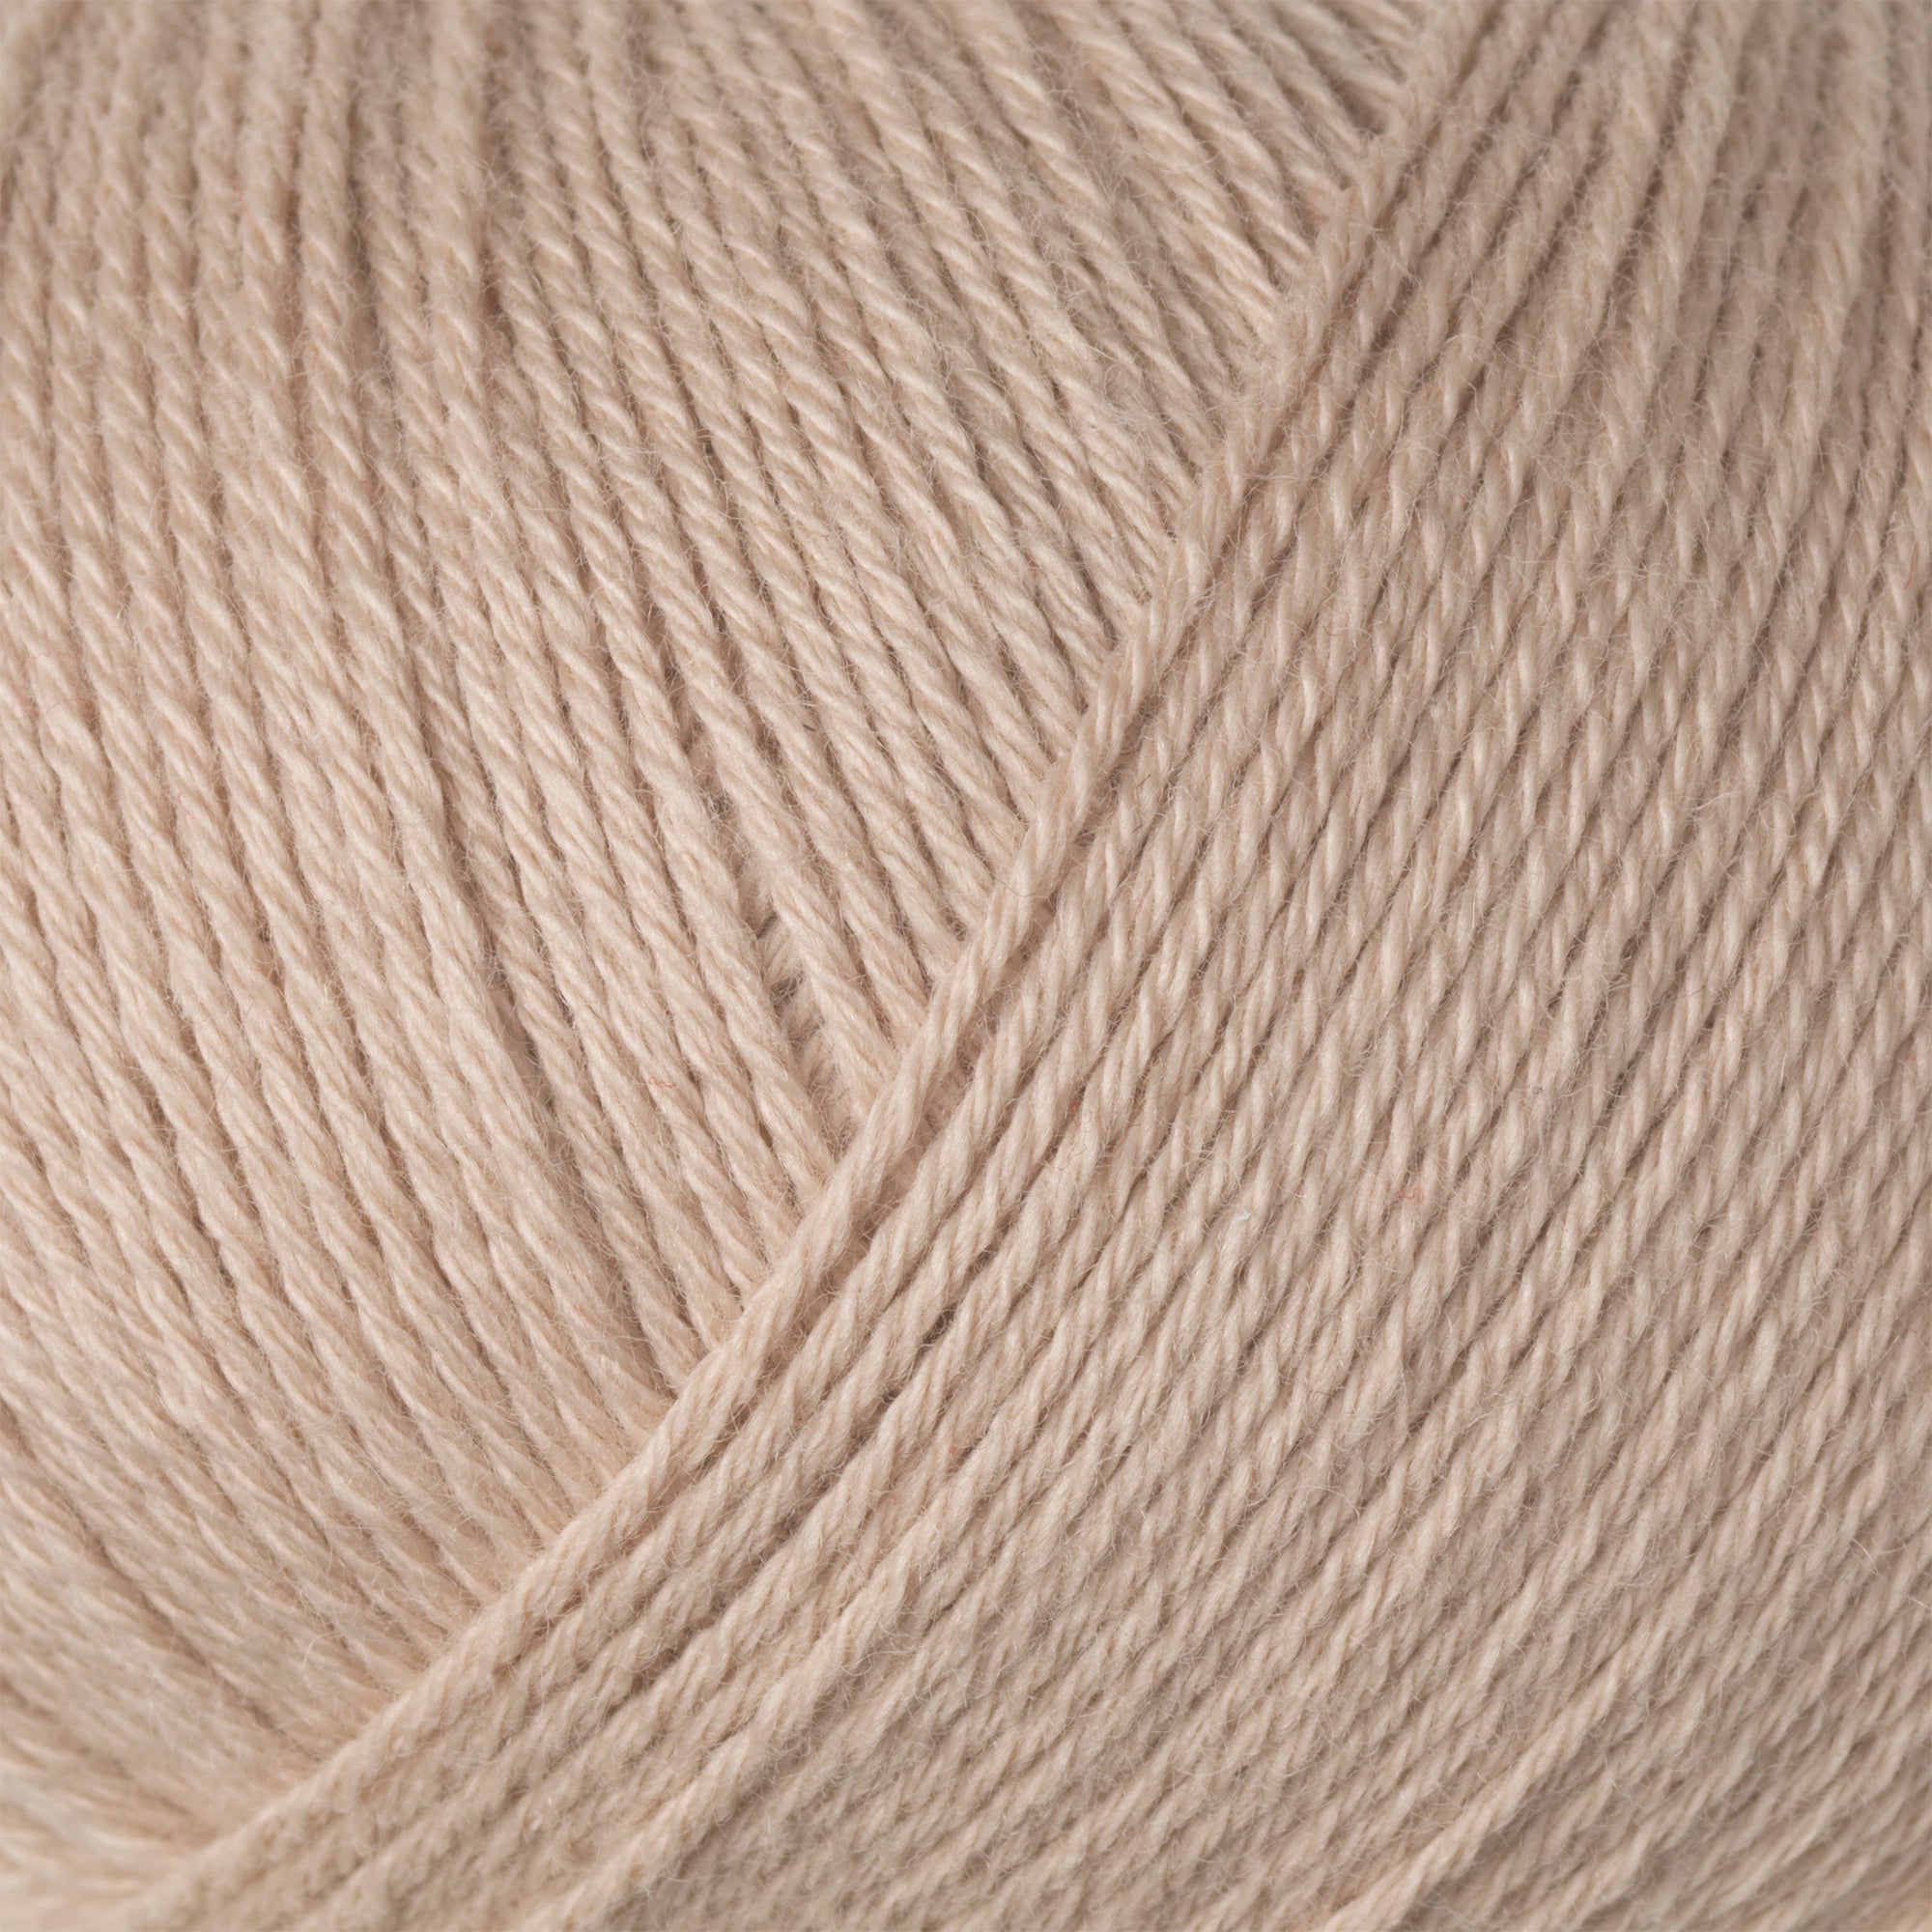 Knitting for Olive Cotton Merino - Powder